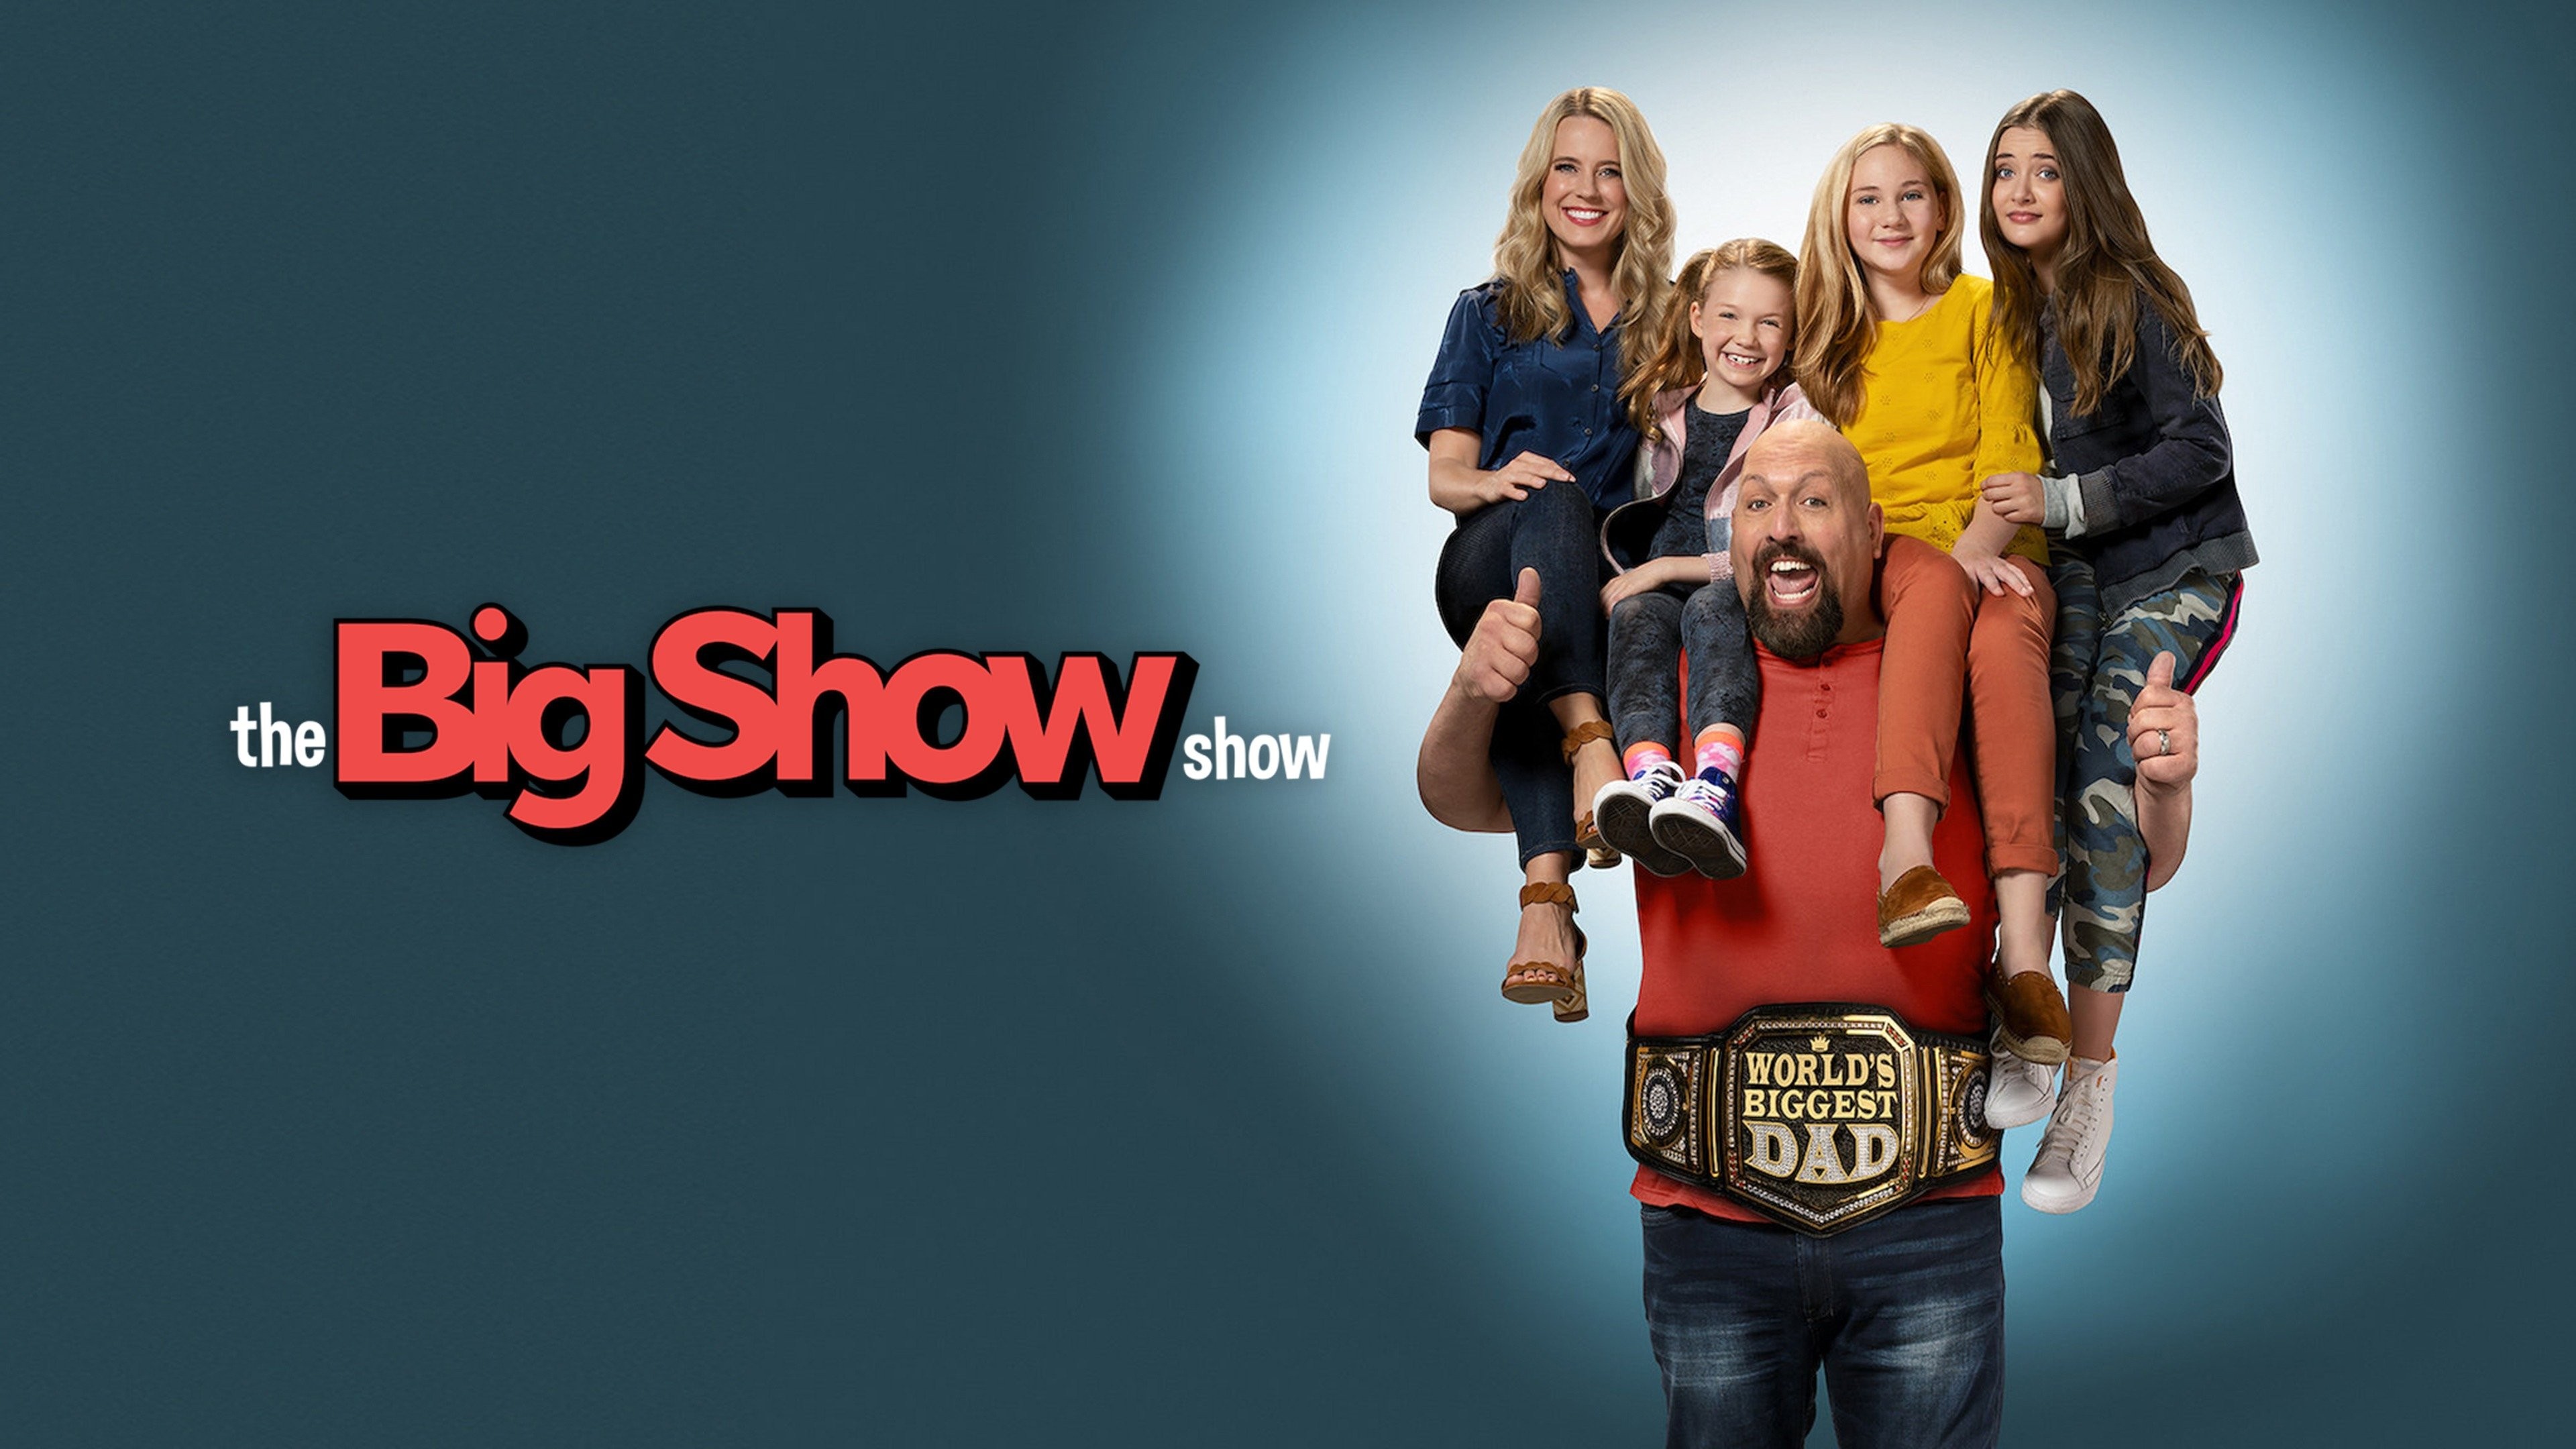 The Big Show Show (TV Series 2020) - IMDb